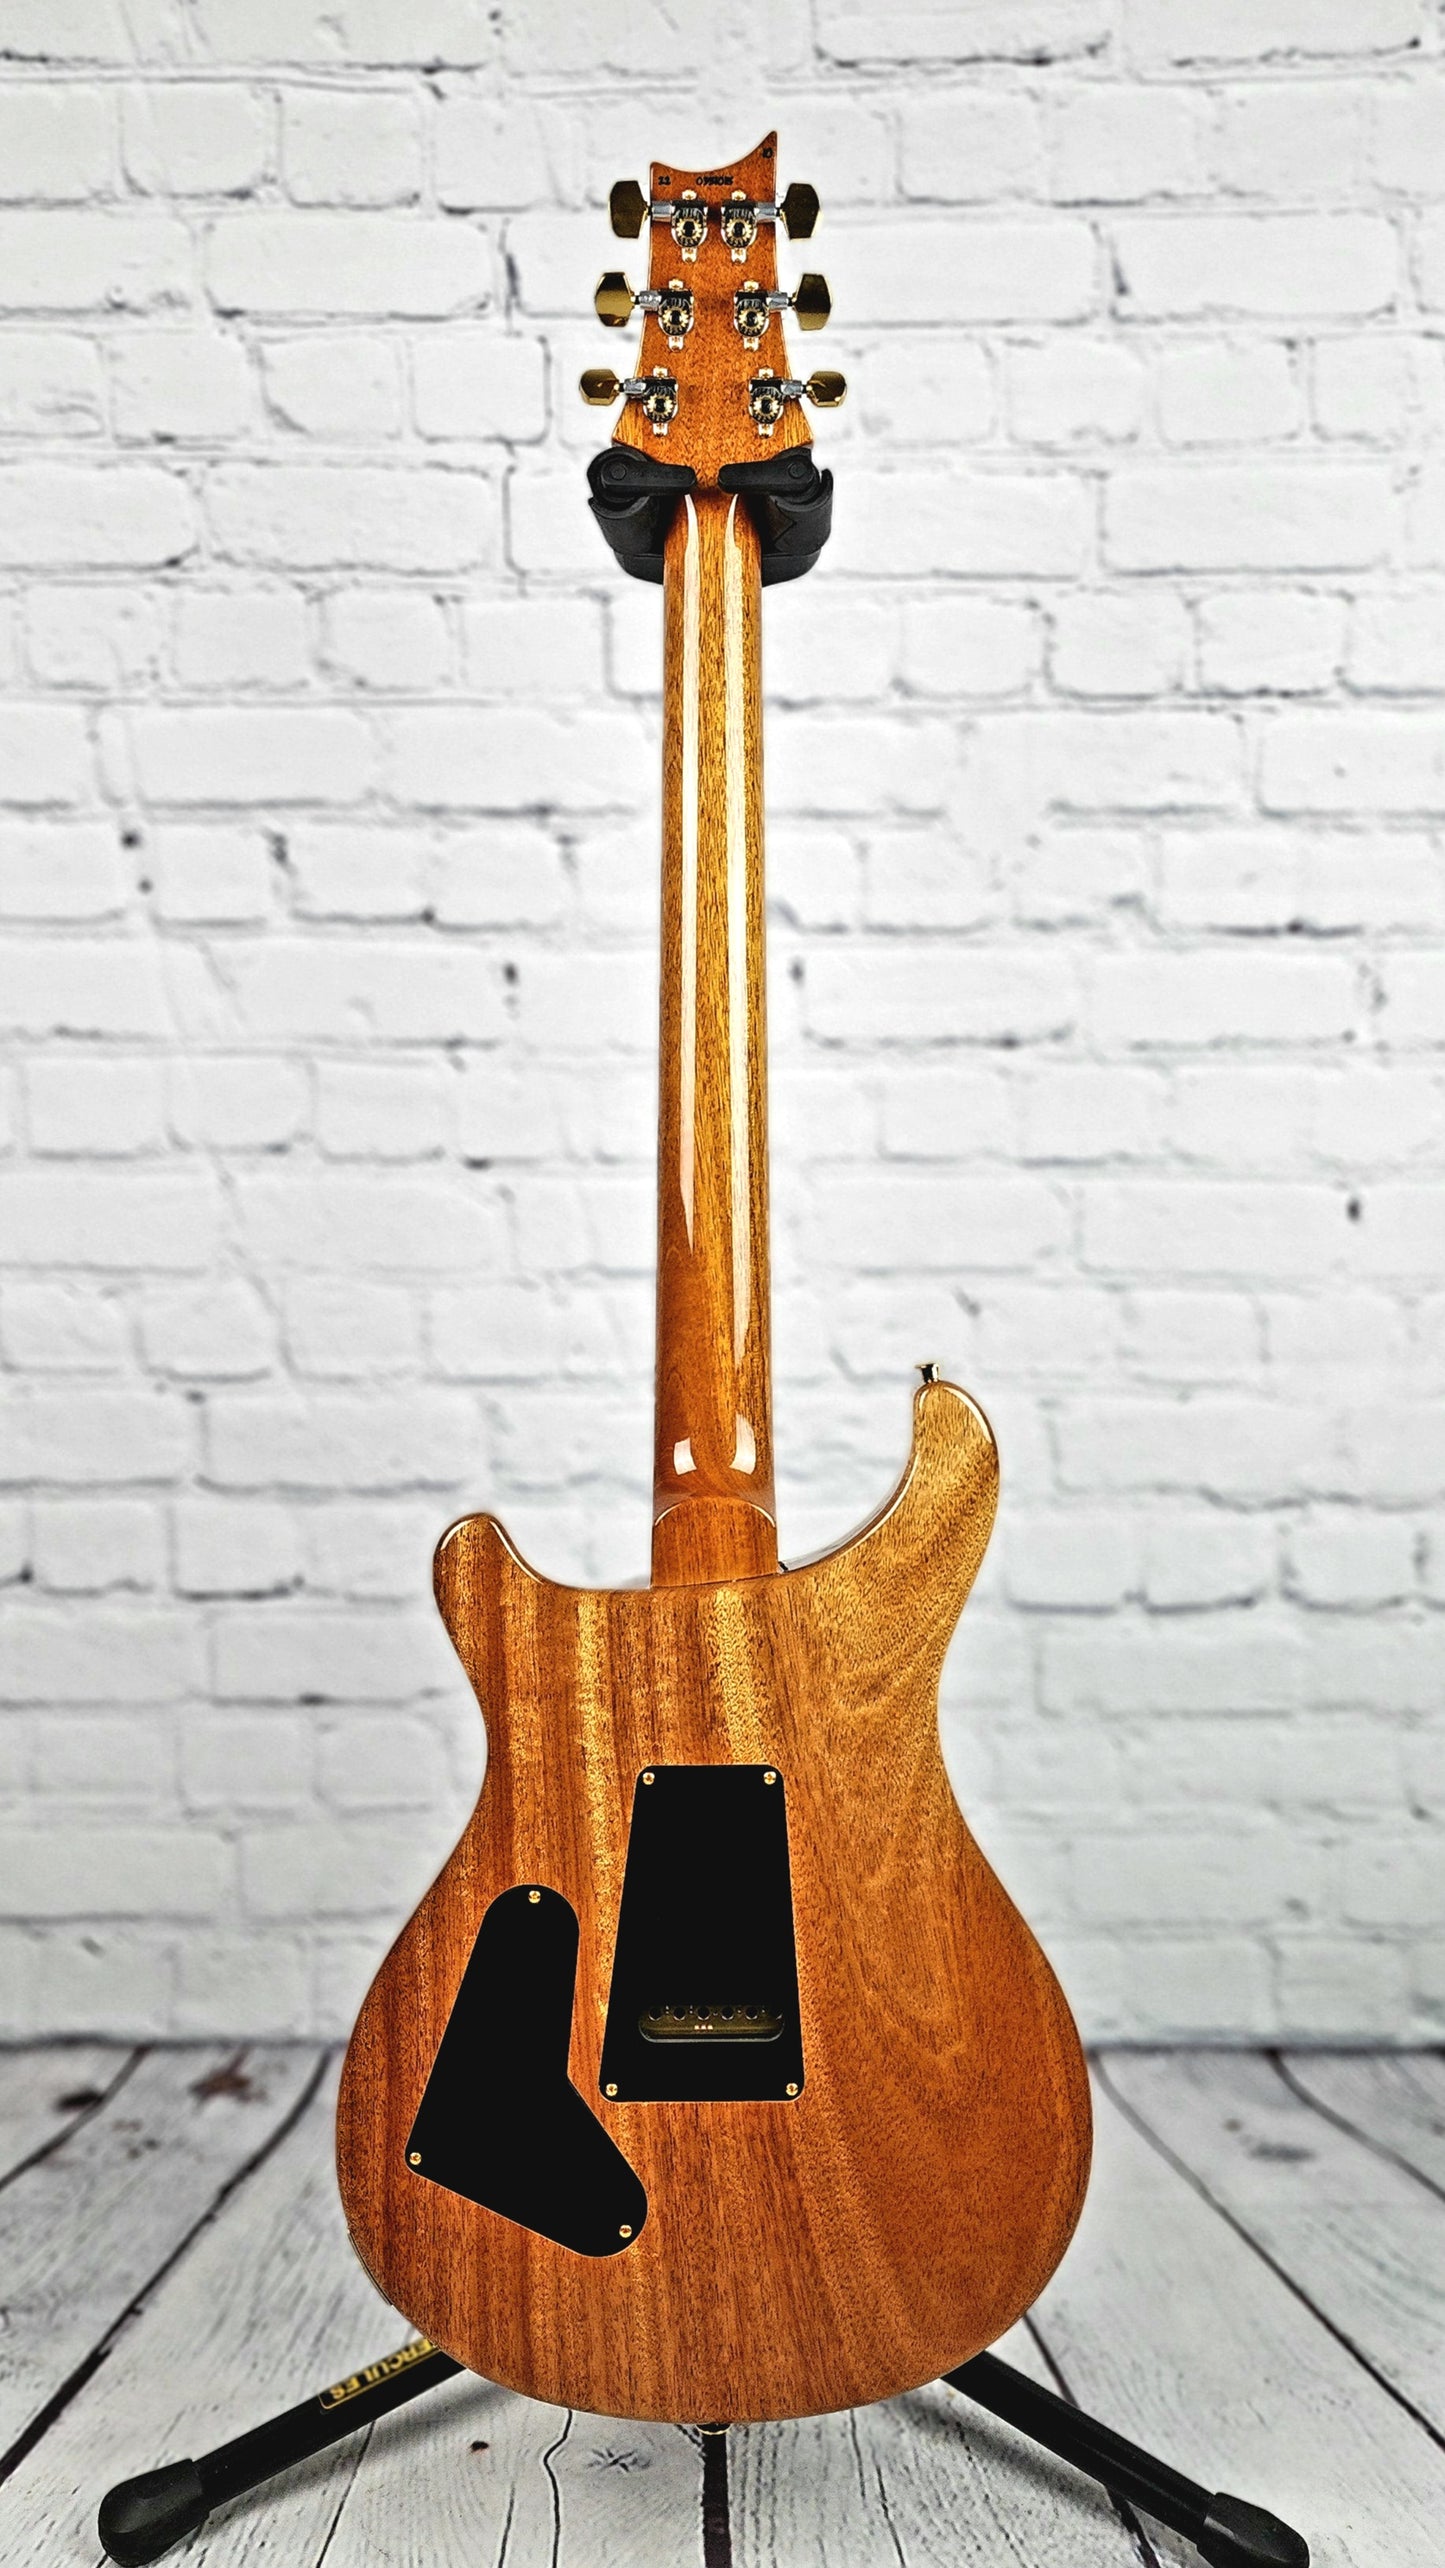 Paul Reed Smith PRS Custom 24 Core 10 Top Electric Guitar Purple Iris